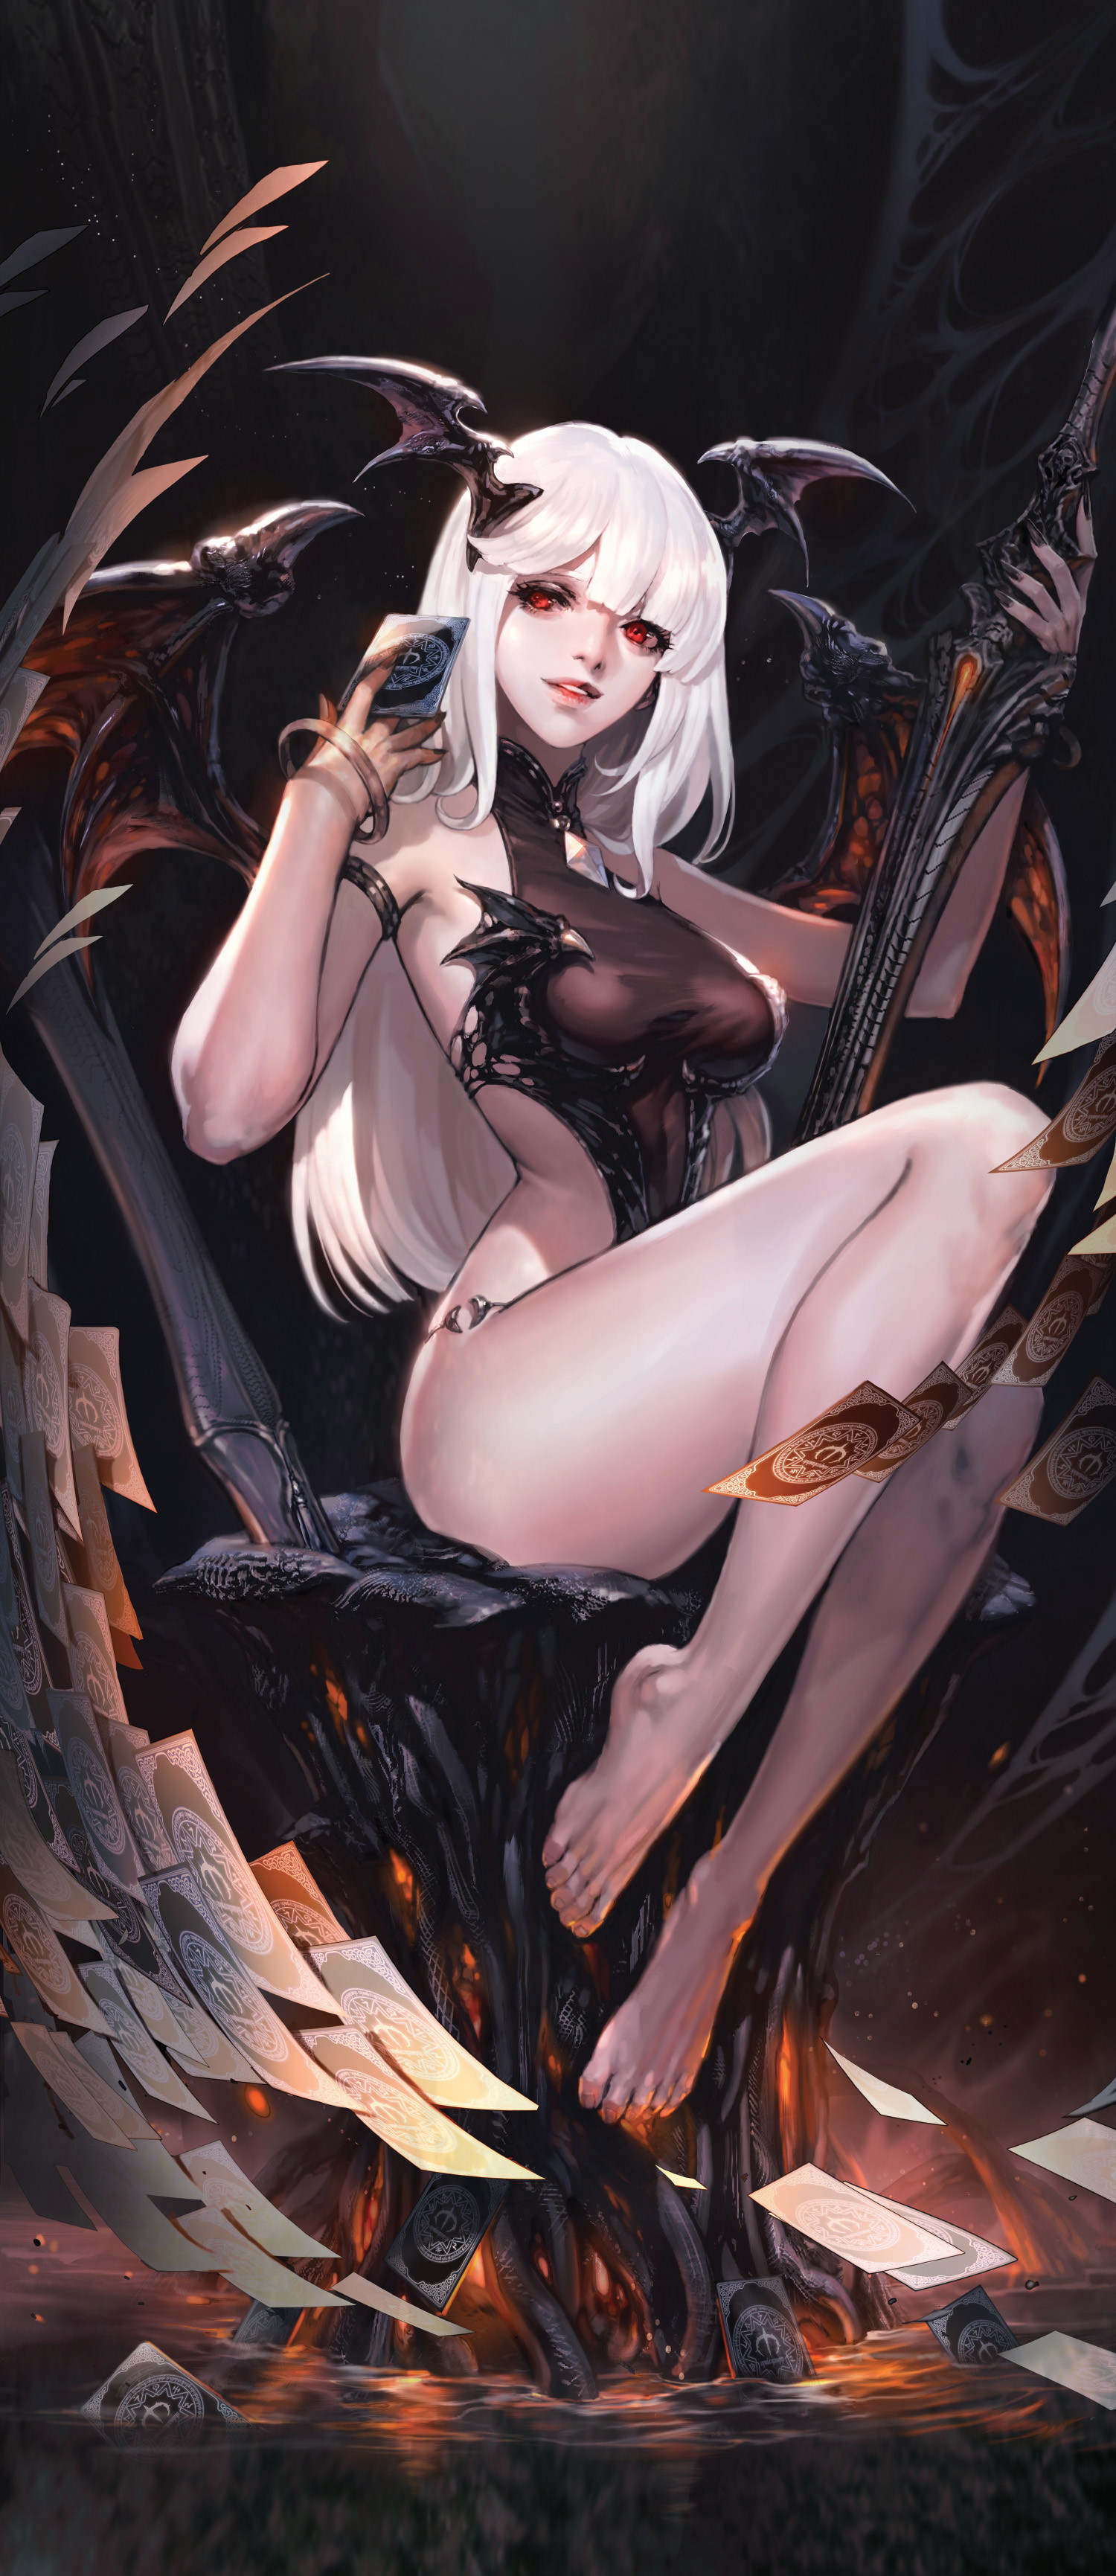 General 1500x3462 Nessi drawing women blonde long hair wings bodysuit throne weapon sword fantasy art red eyes big boobs